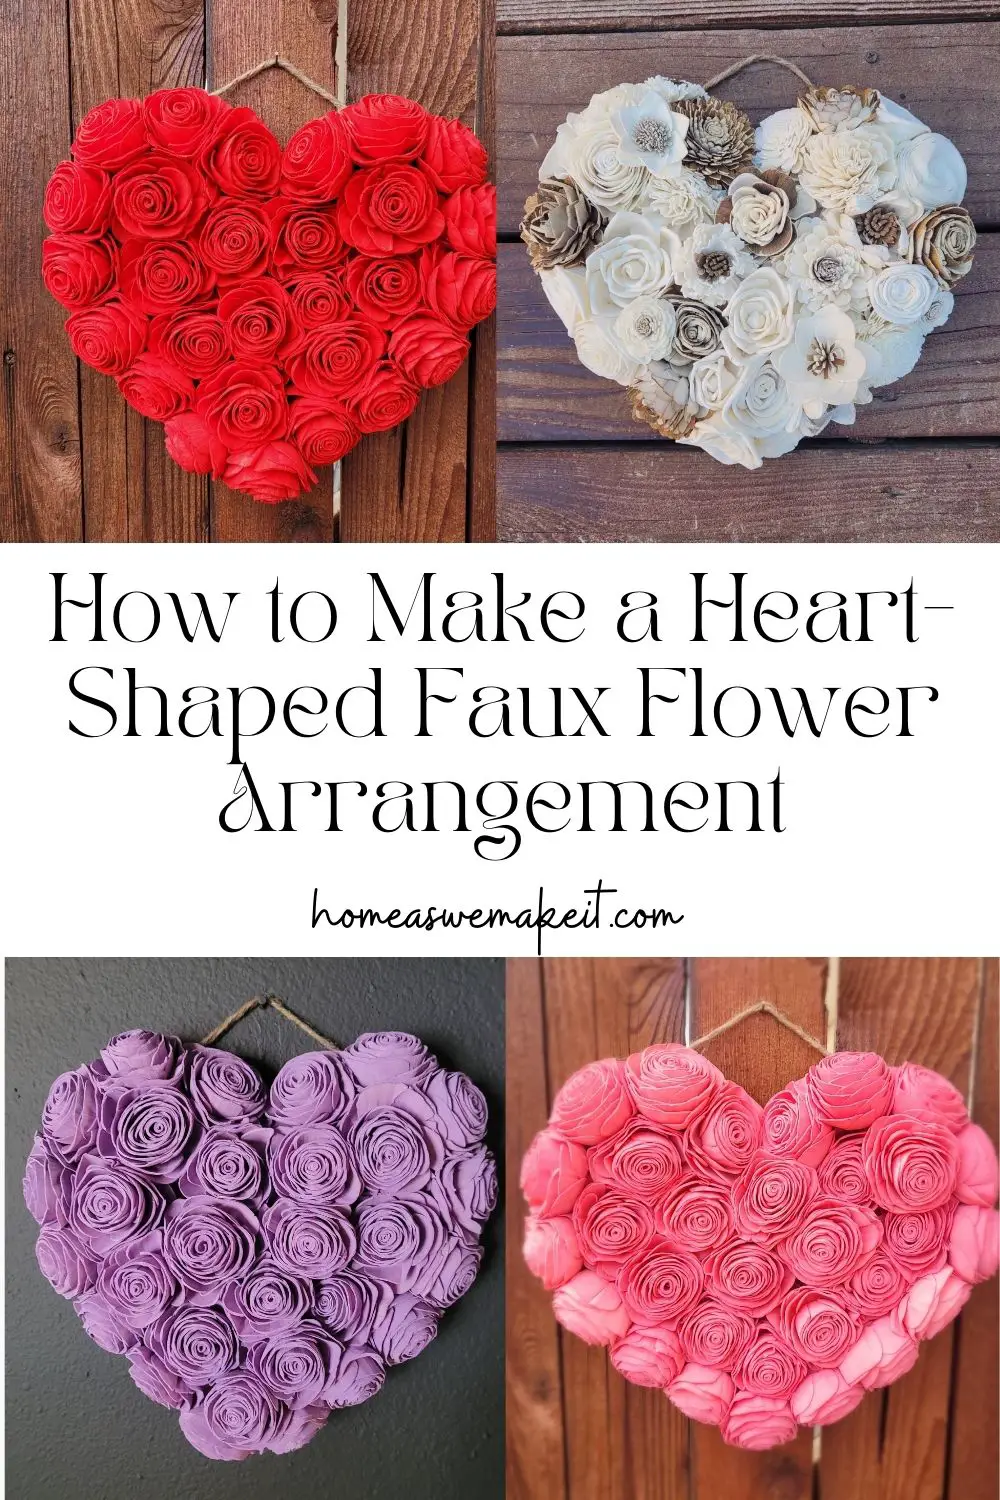 How to Make a Heart-Shaped Faux Flower Arrangement